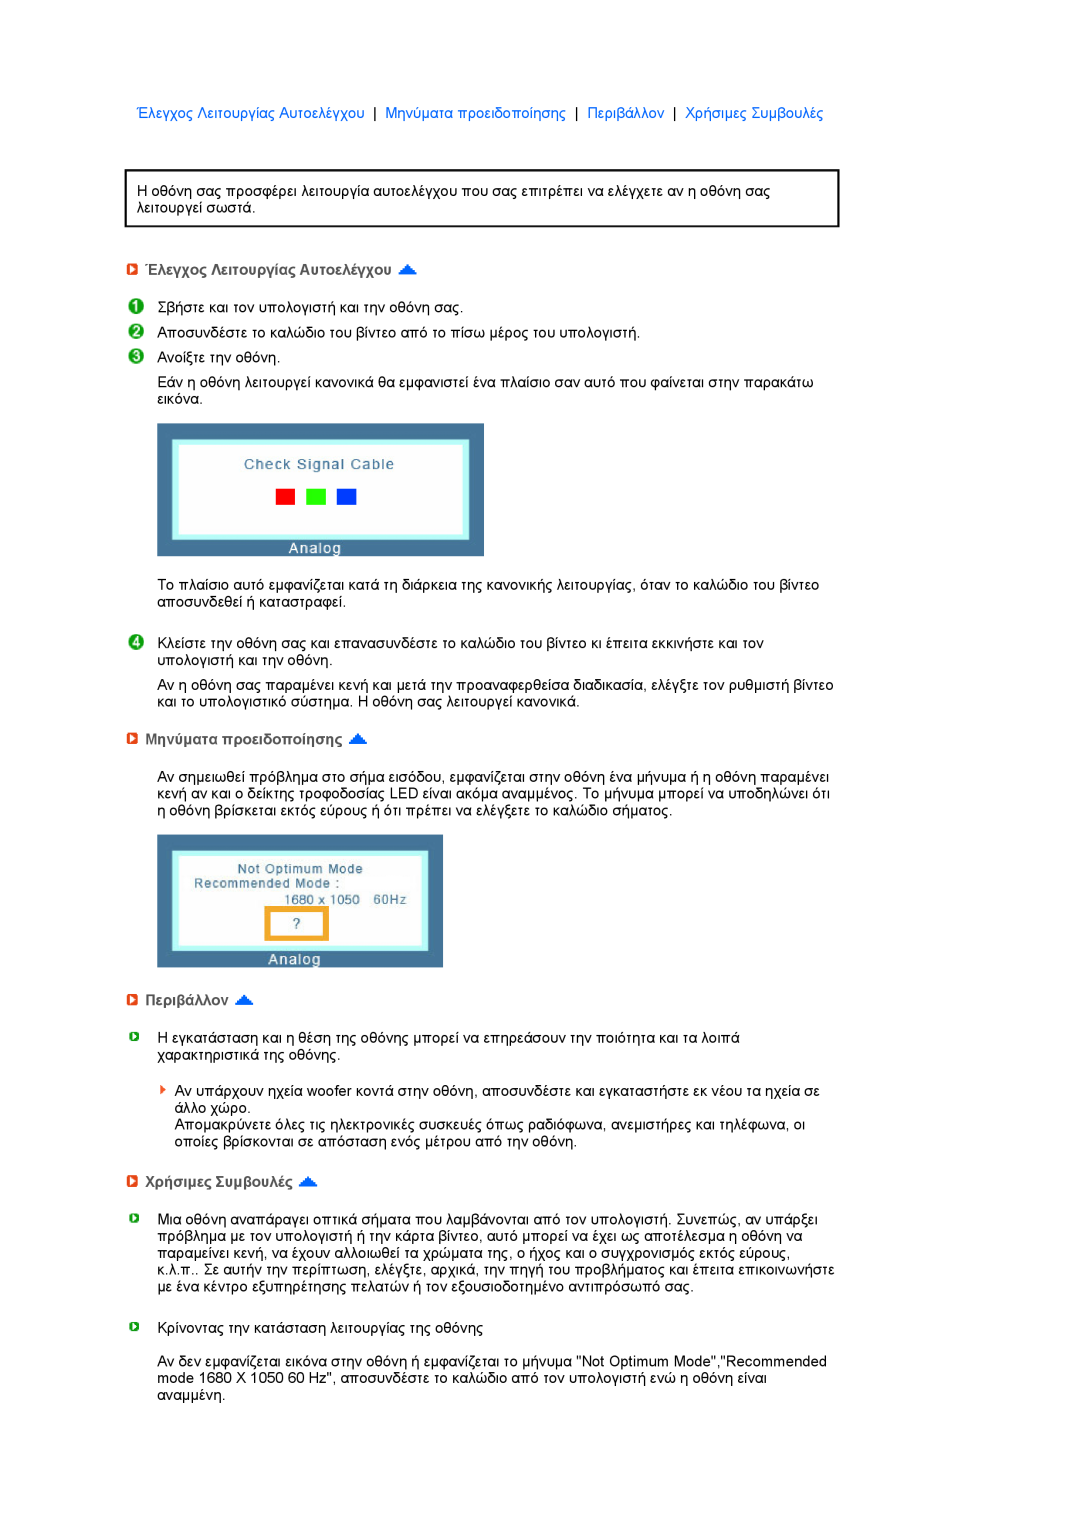 Samsung LS20PEBSFV/EDC manual Έλεγχος Λειτουργίας Αυτοελέγχου, Μηνύµατα προειδοποίησης, Περιβάλλον, Χρήσιµες Συµβουλές 